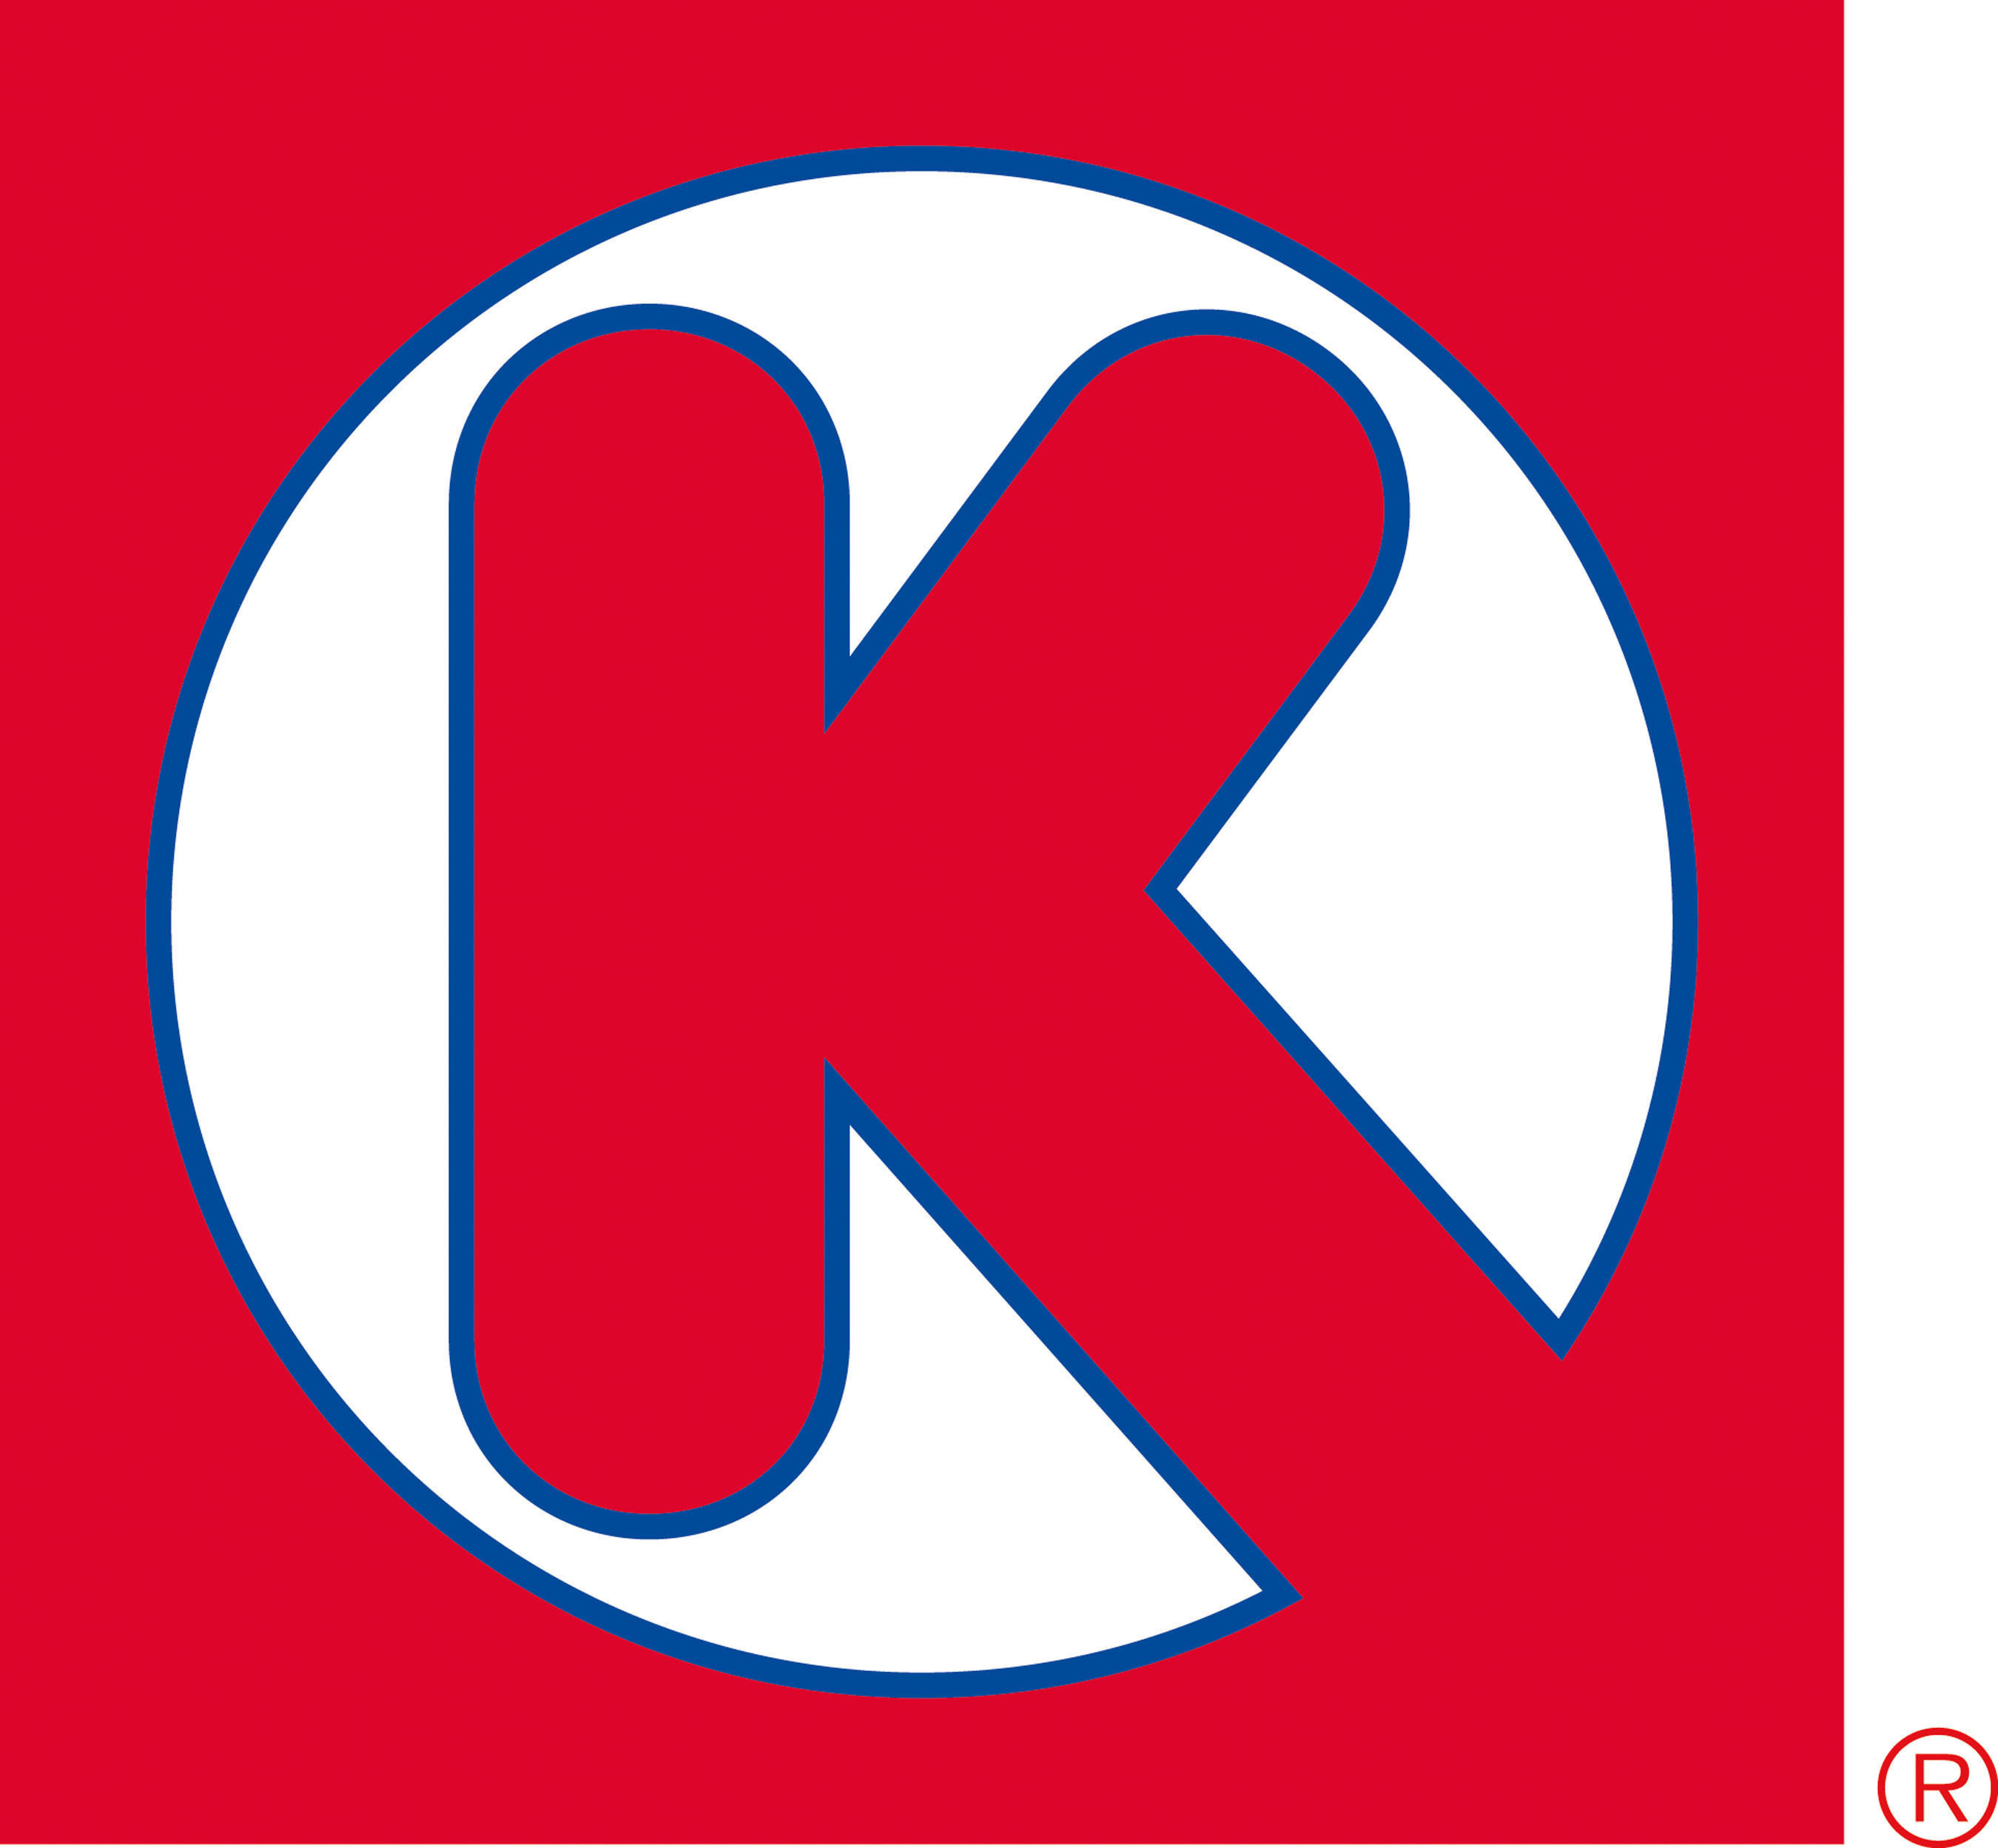 Circle K logo. (PRNewsFoto/IBM) (PRNewsFoto/IBM)